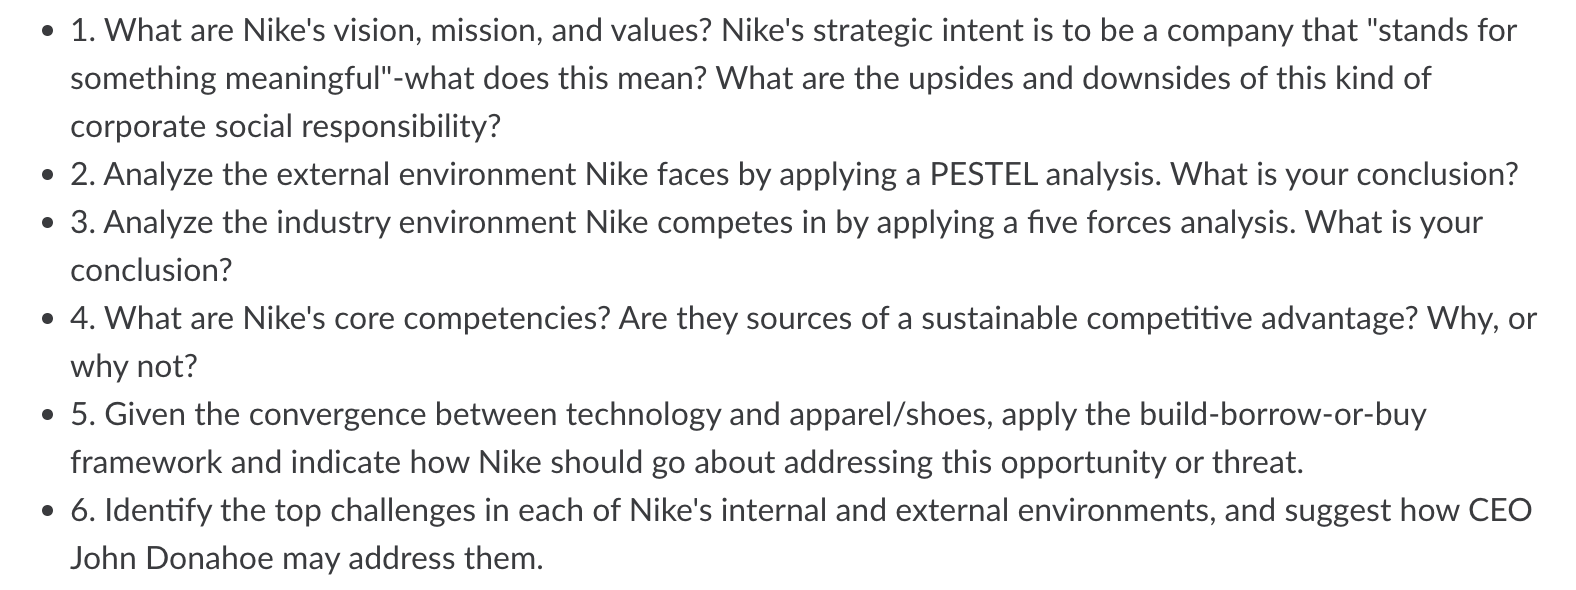 øje hovedvej Kredsløb Solved - 1. What are Nike's vision, mission, and values? | Chegg.com